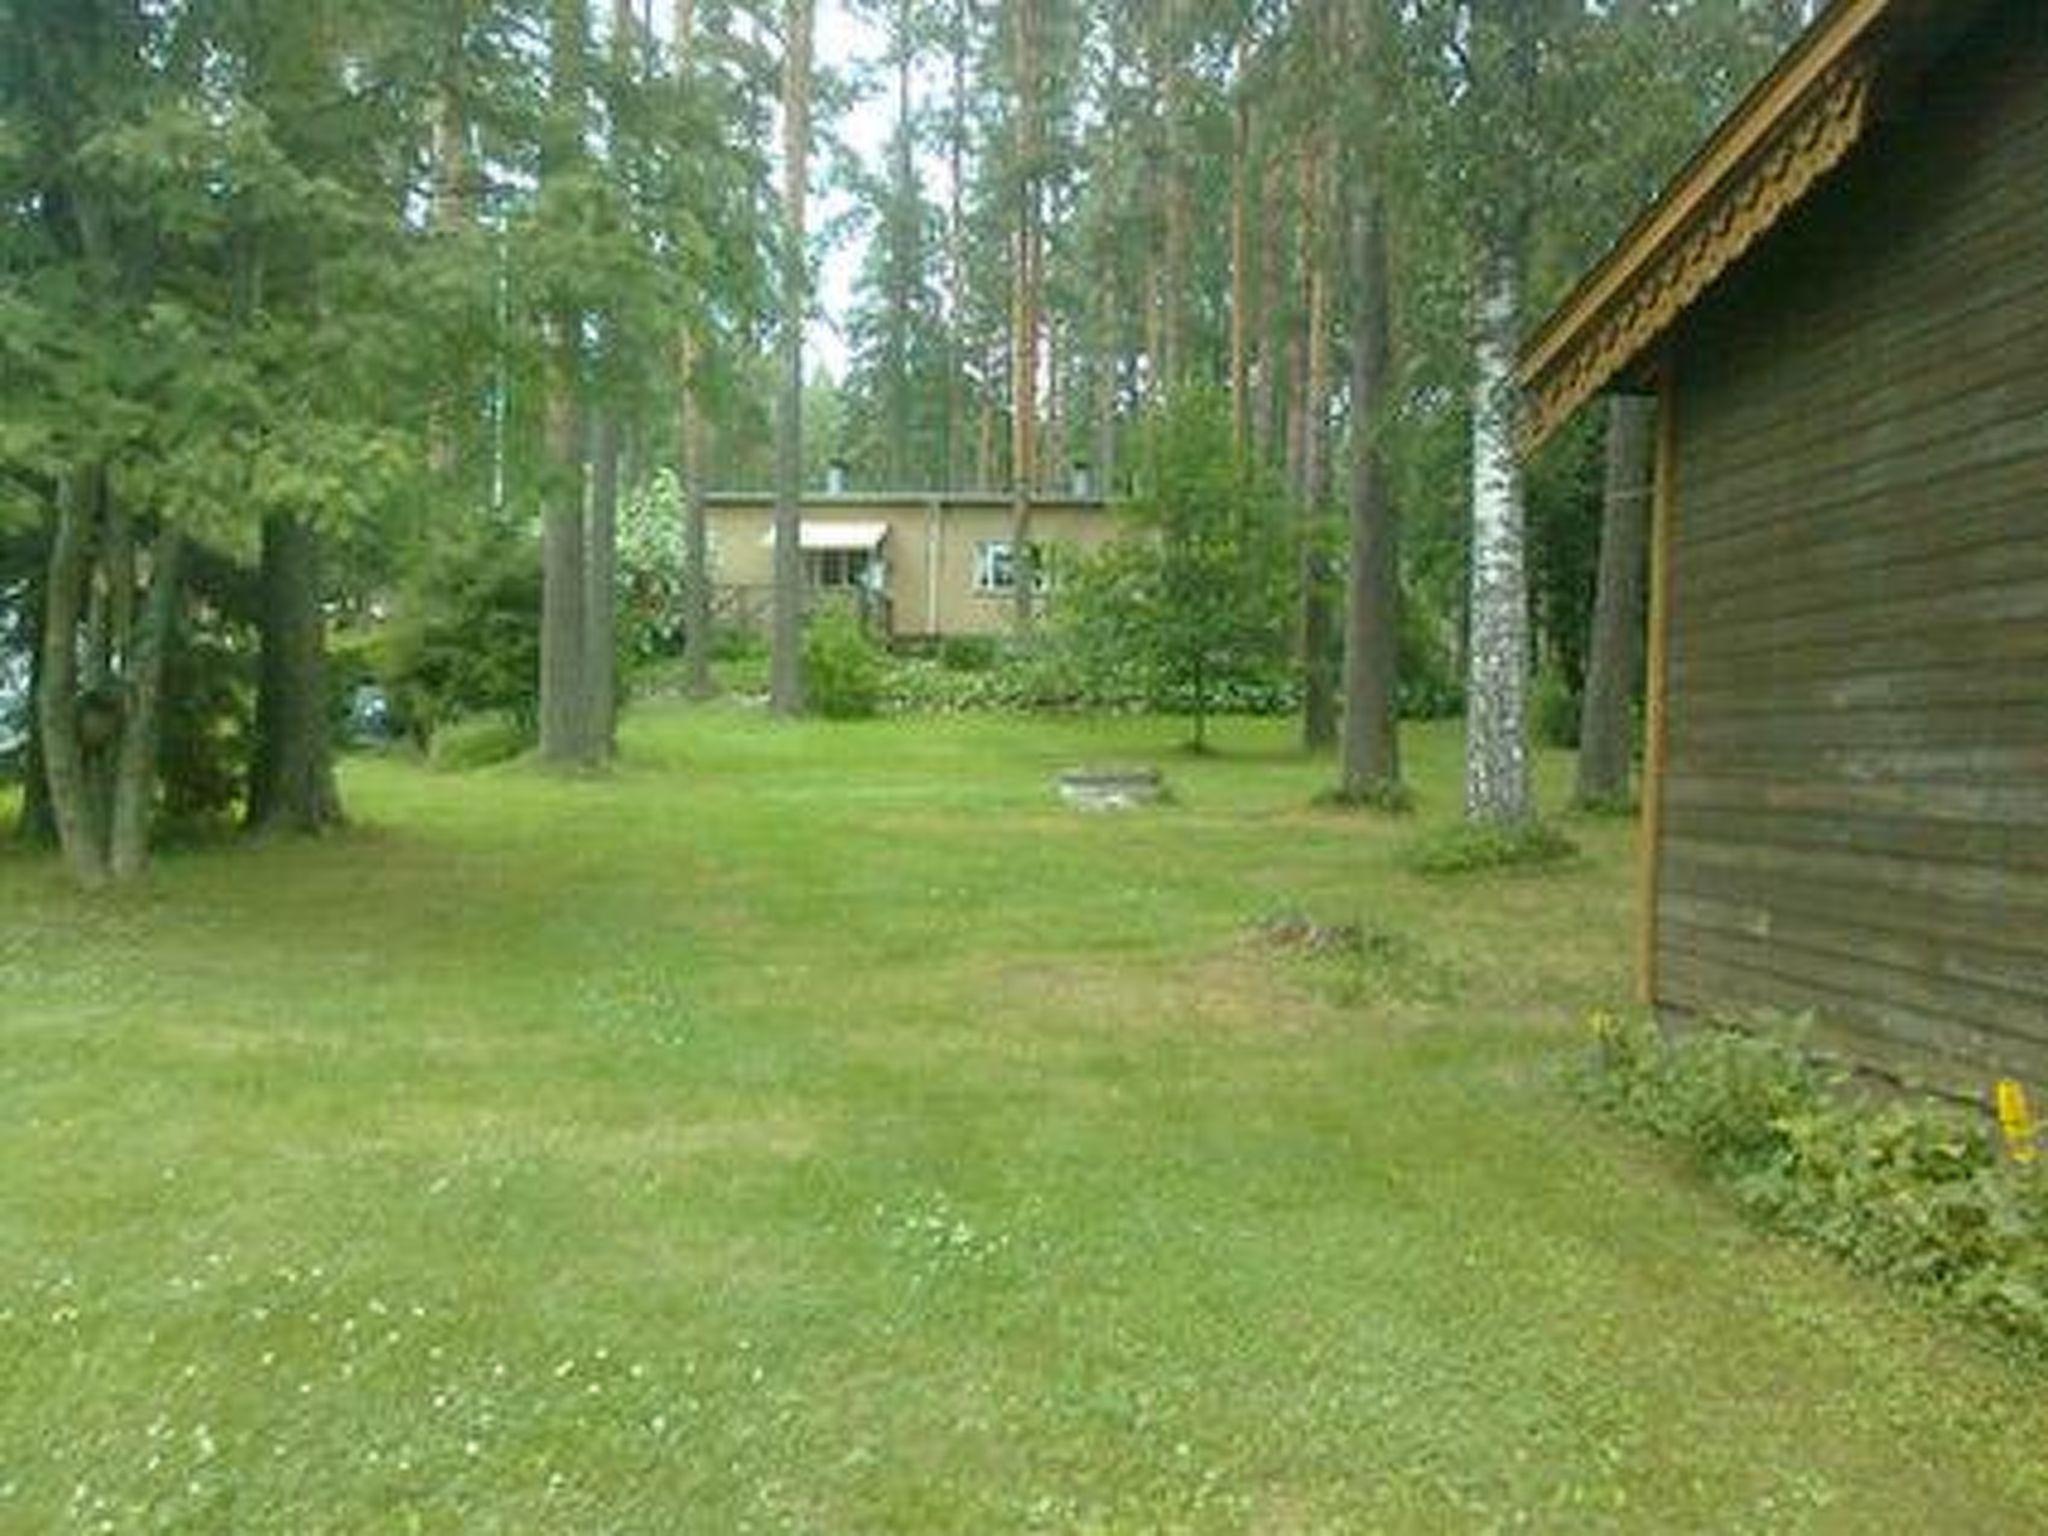 Photo 22 - 3 bedroom House in Savonlinna with sauna